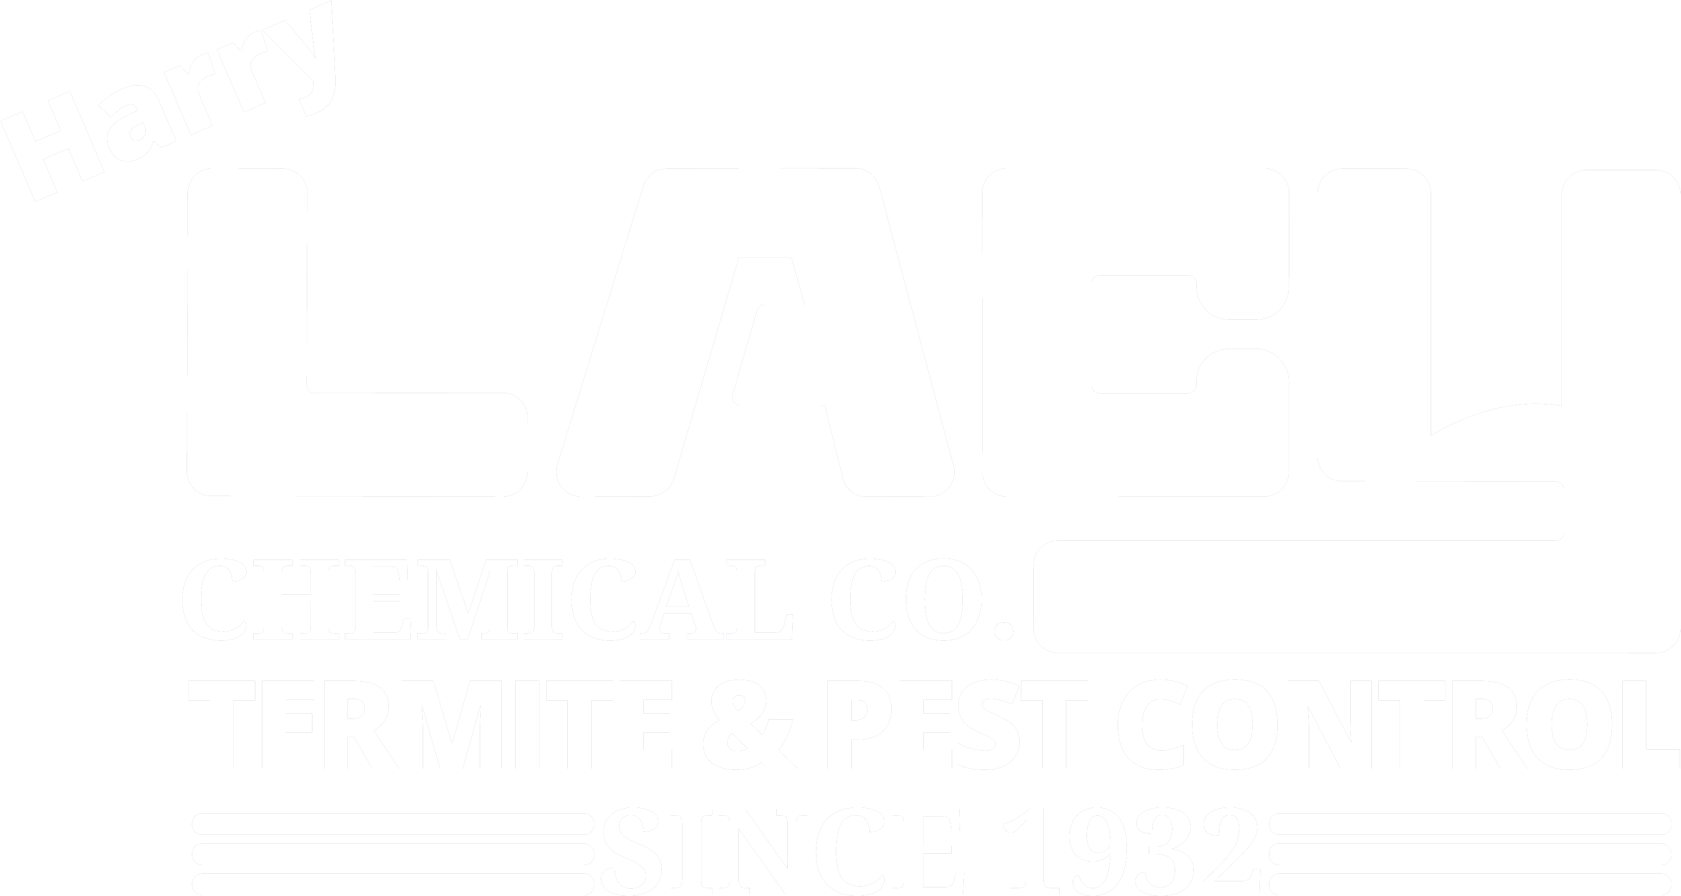 Harry Lacy Chemical Company, LLC